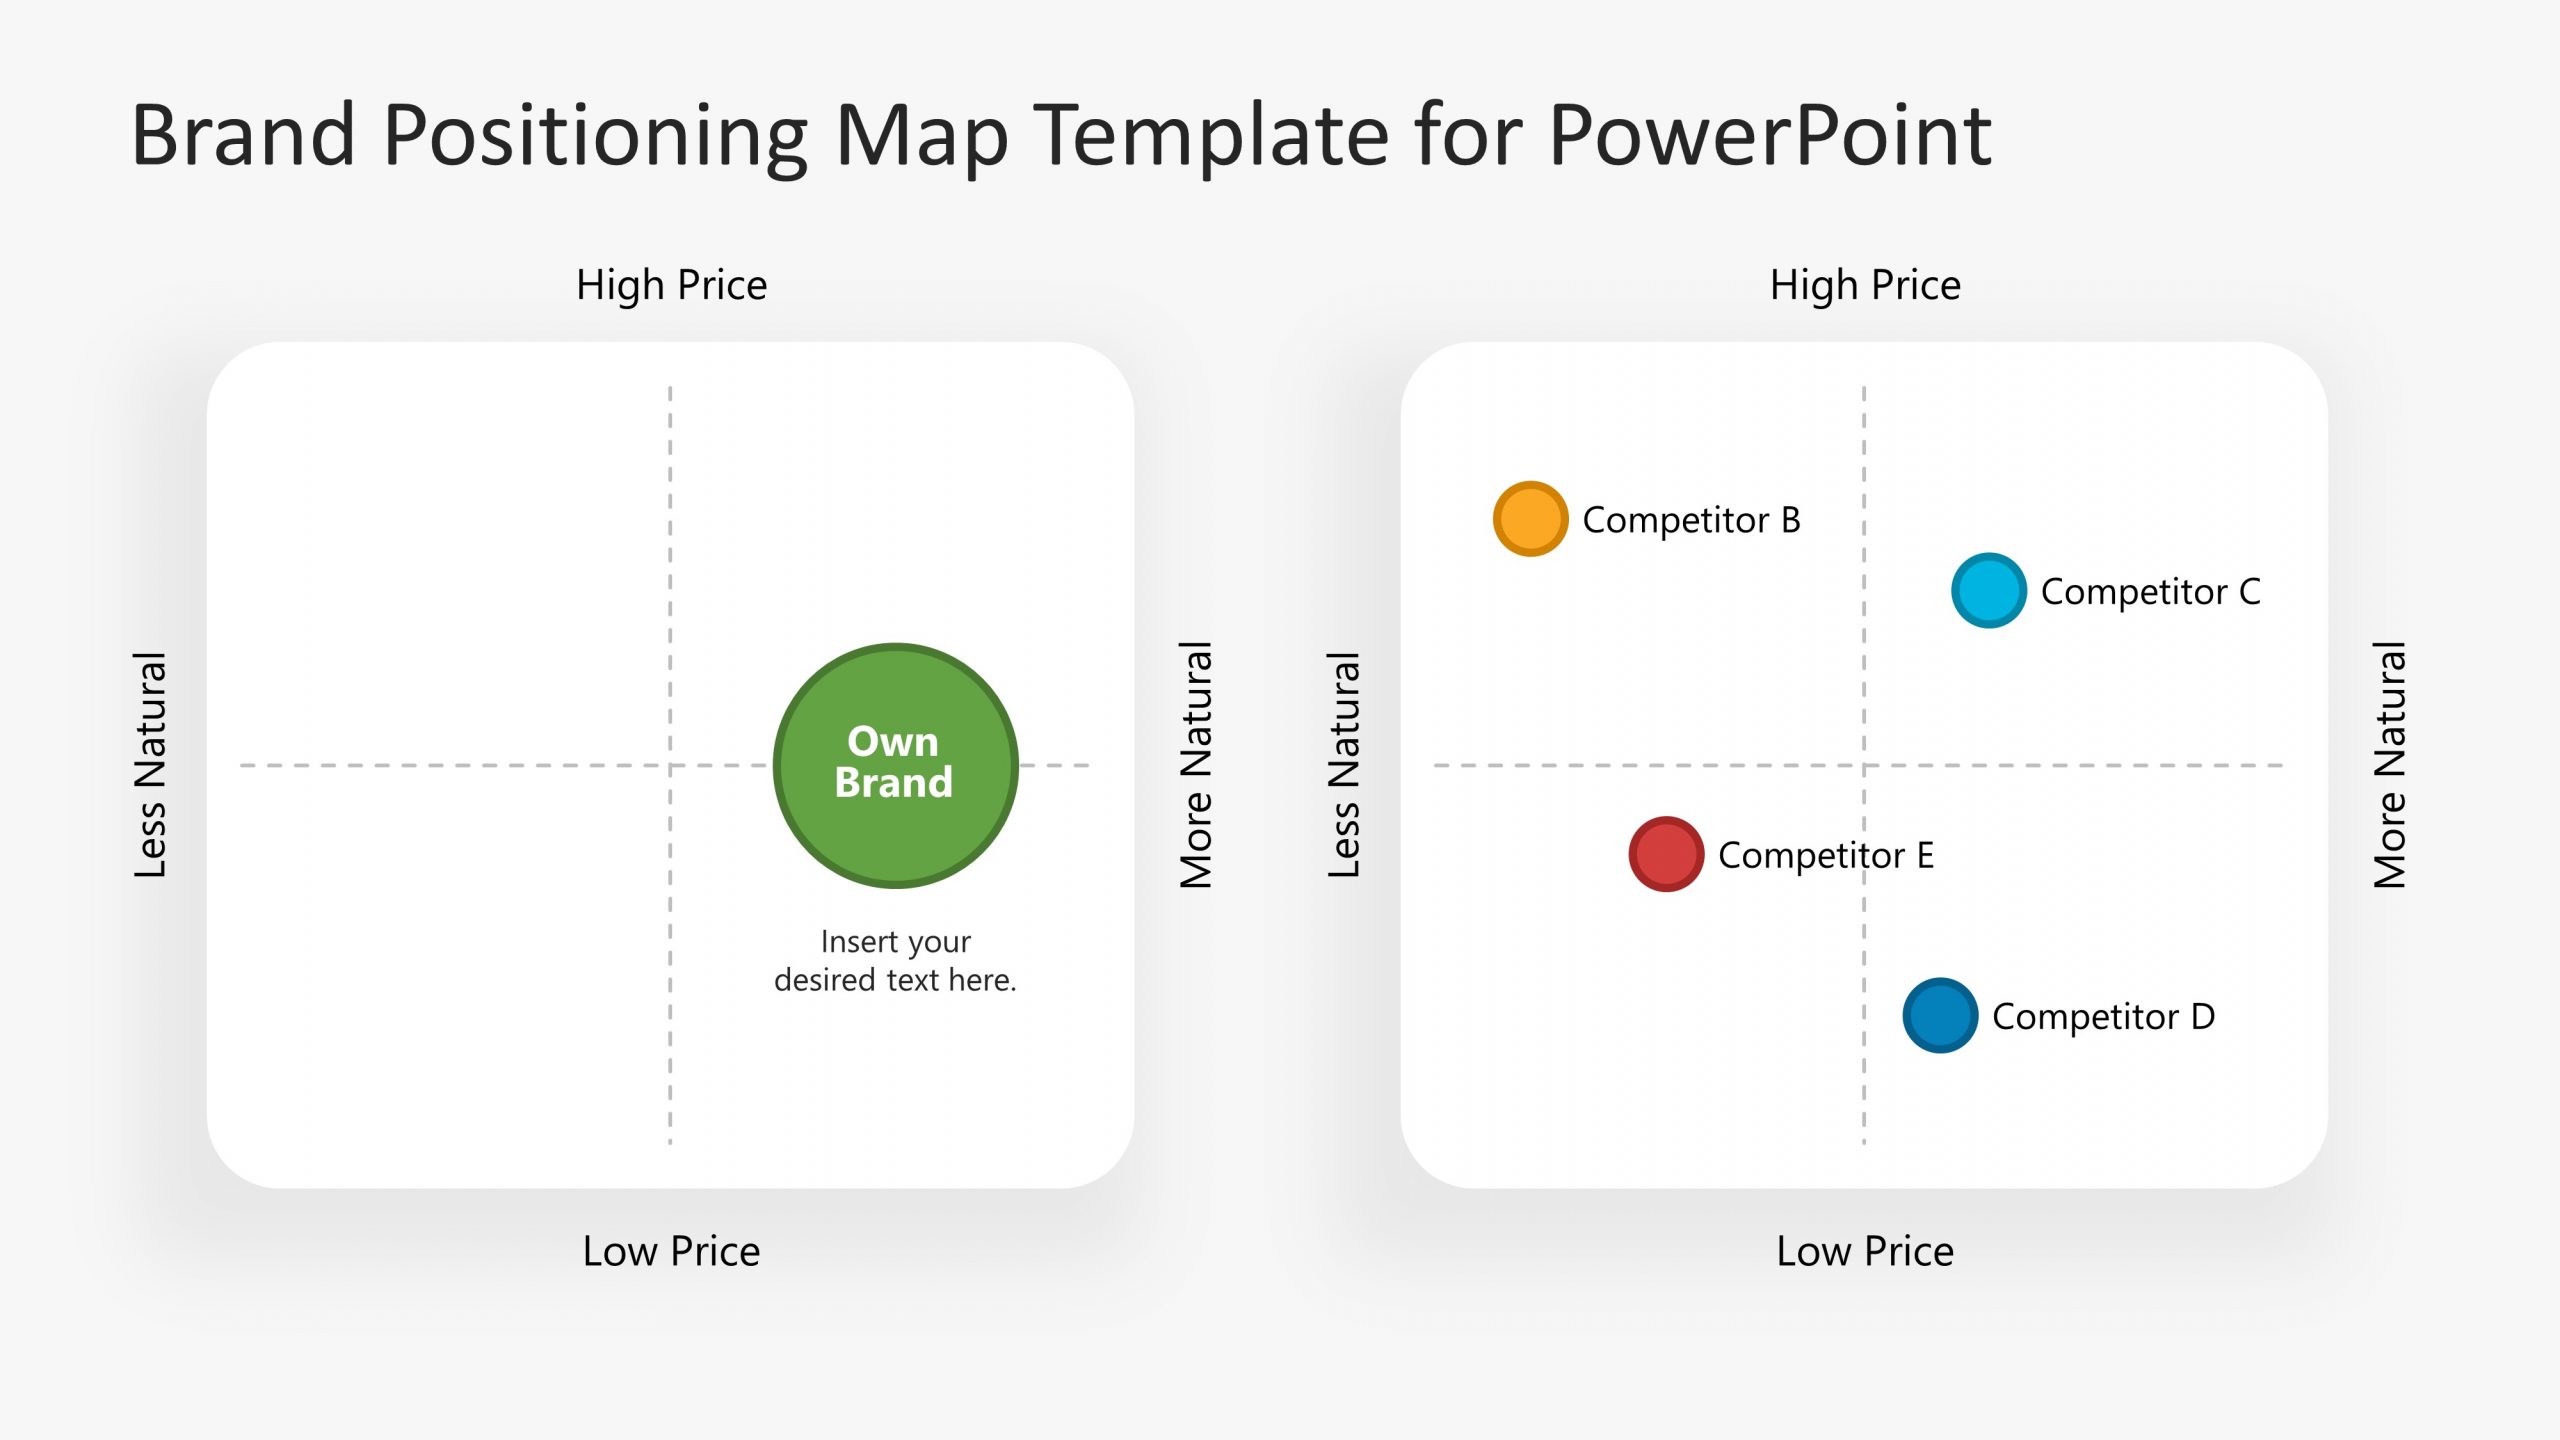 perceptual map template powerpoint